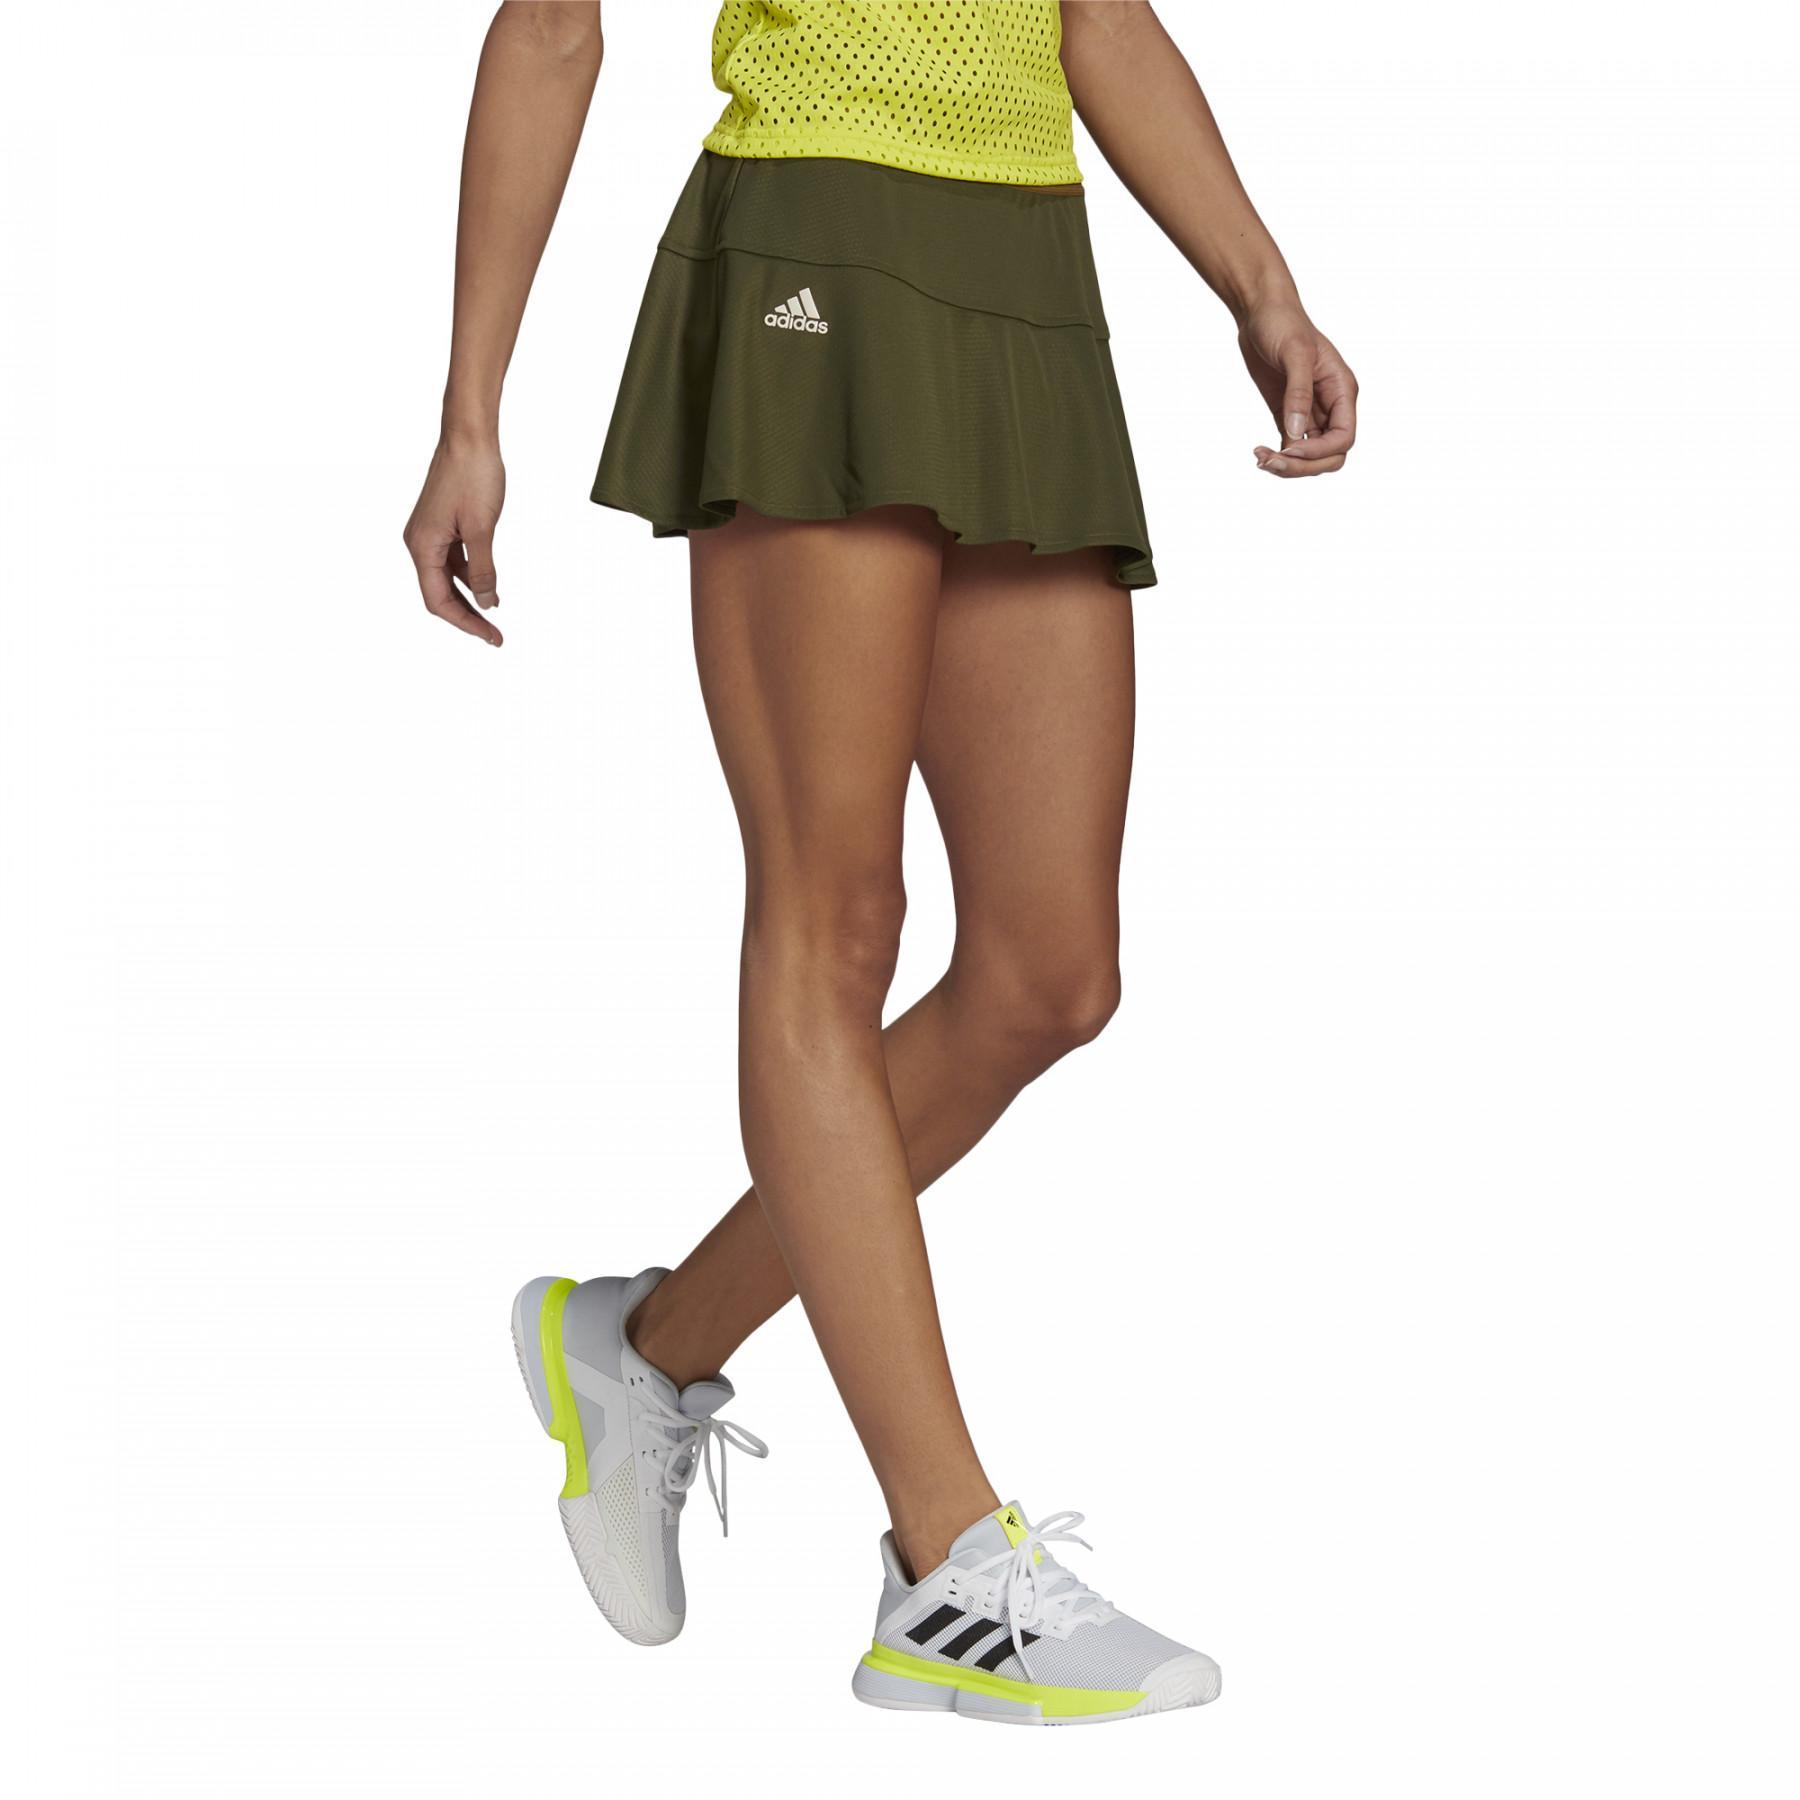 Jupe-short femme adidas Tennis Heat Ready Primeblue Match